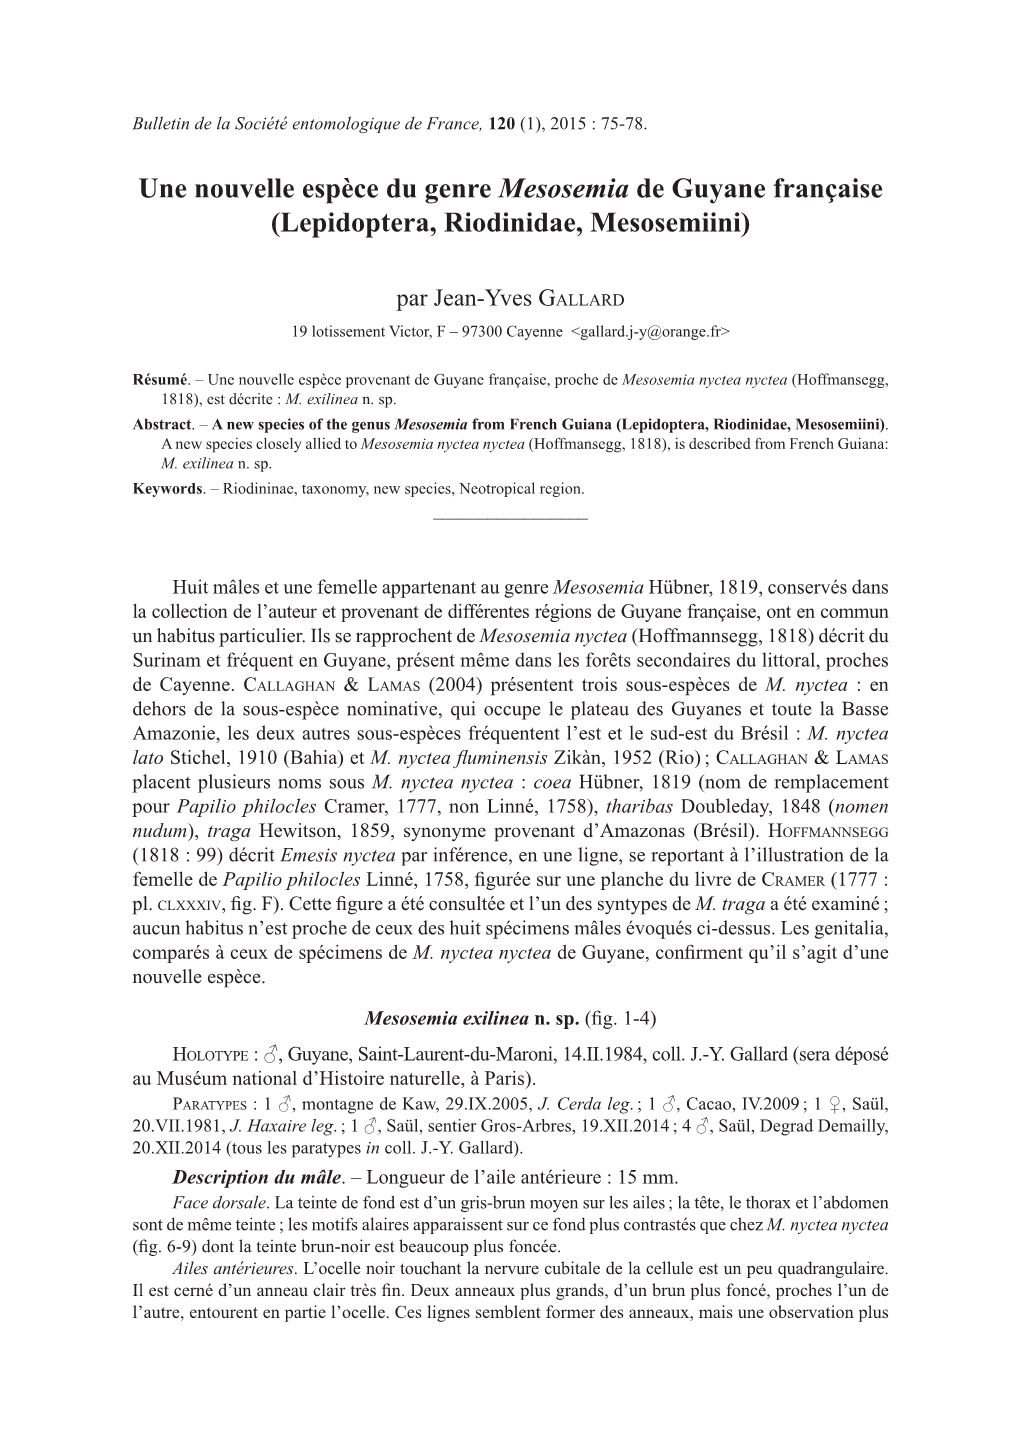 Une Nouvelle Espèce Du Genre Mesosemia De Guyane Française (Lepidoptera, Riodinidae, Mesosemiini)